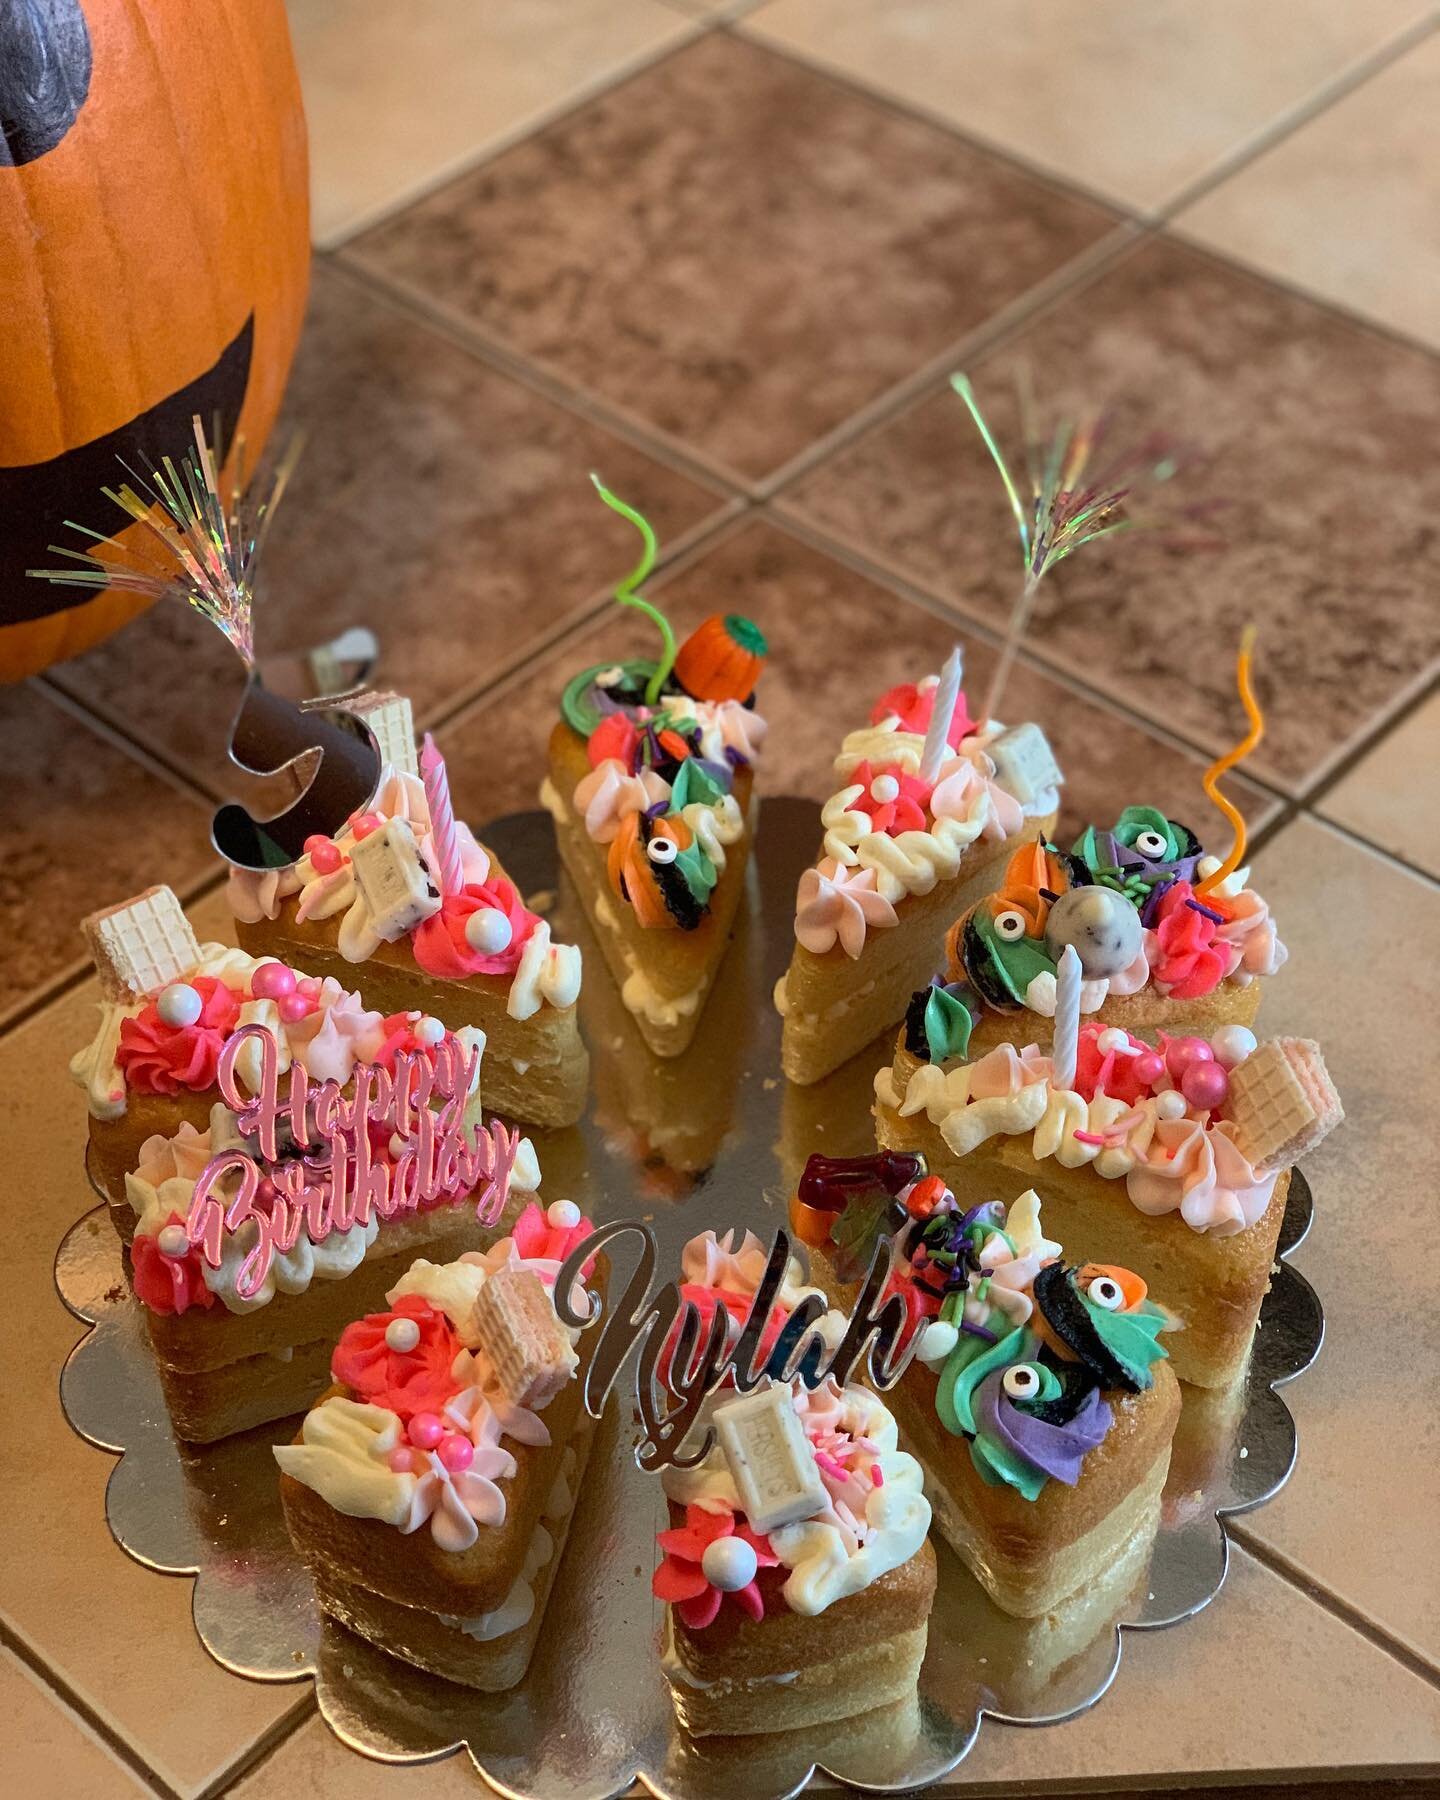 Happy Halloween Birthday! Click the link in my bio to place your order!

#Birthday #Buttercream #Cakes #CakeIdeas #CakePops #Chocolate #ChocolateCakes #Congratulations #Cupcakes #Dessert #HappyBirthday #HappyHalloween #Halloween #LongIslandCakes #New